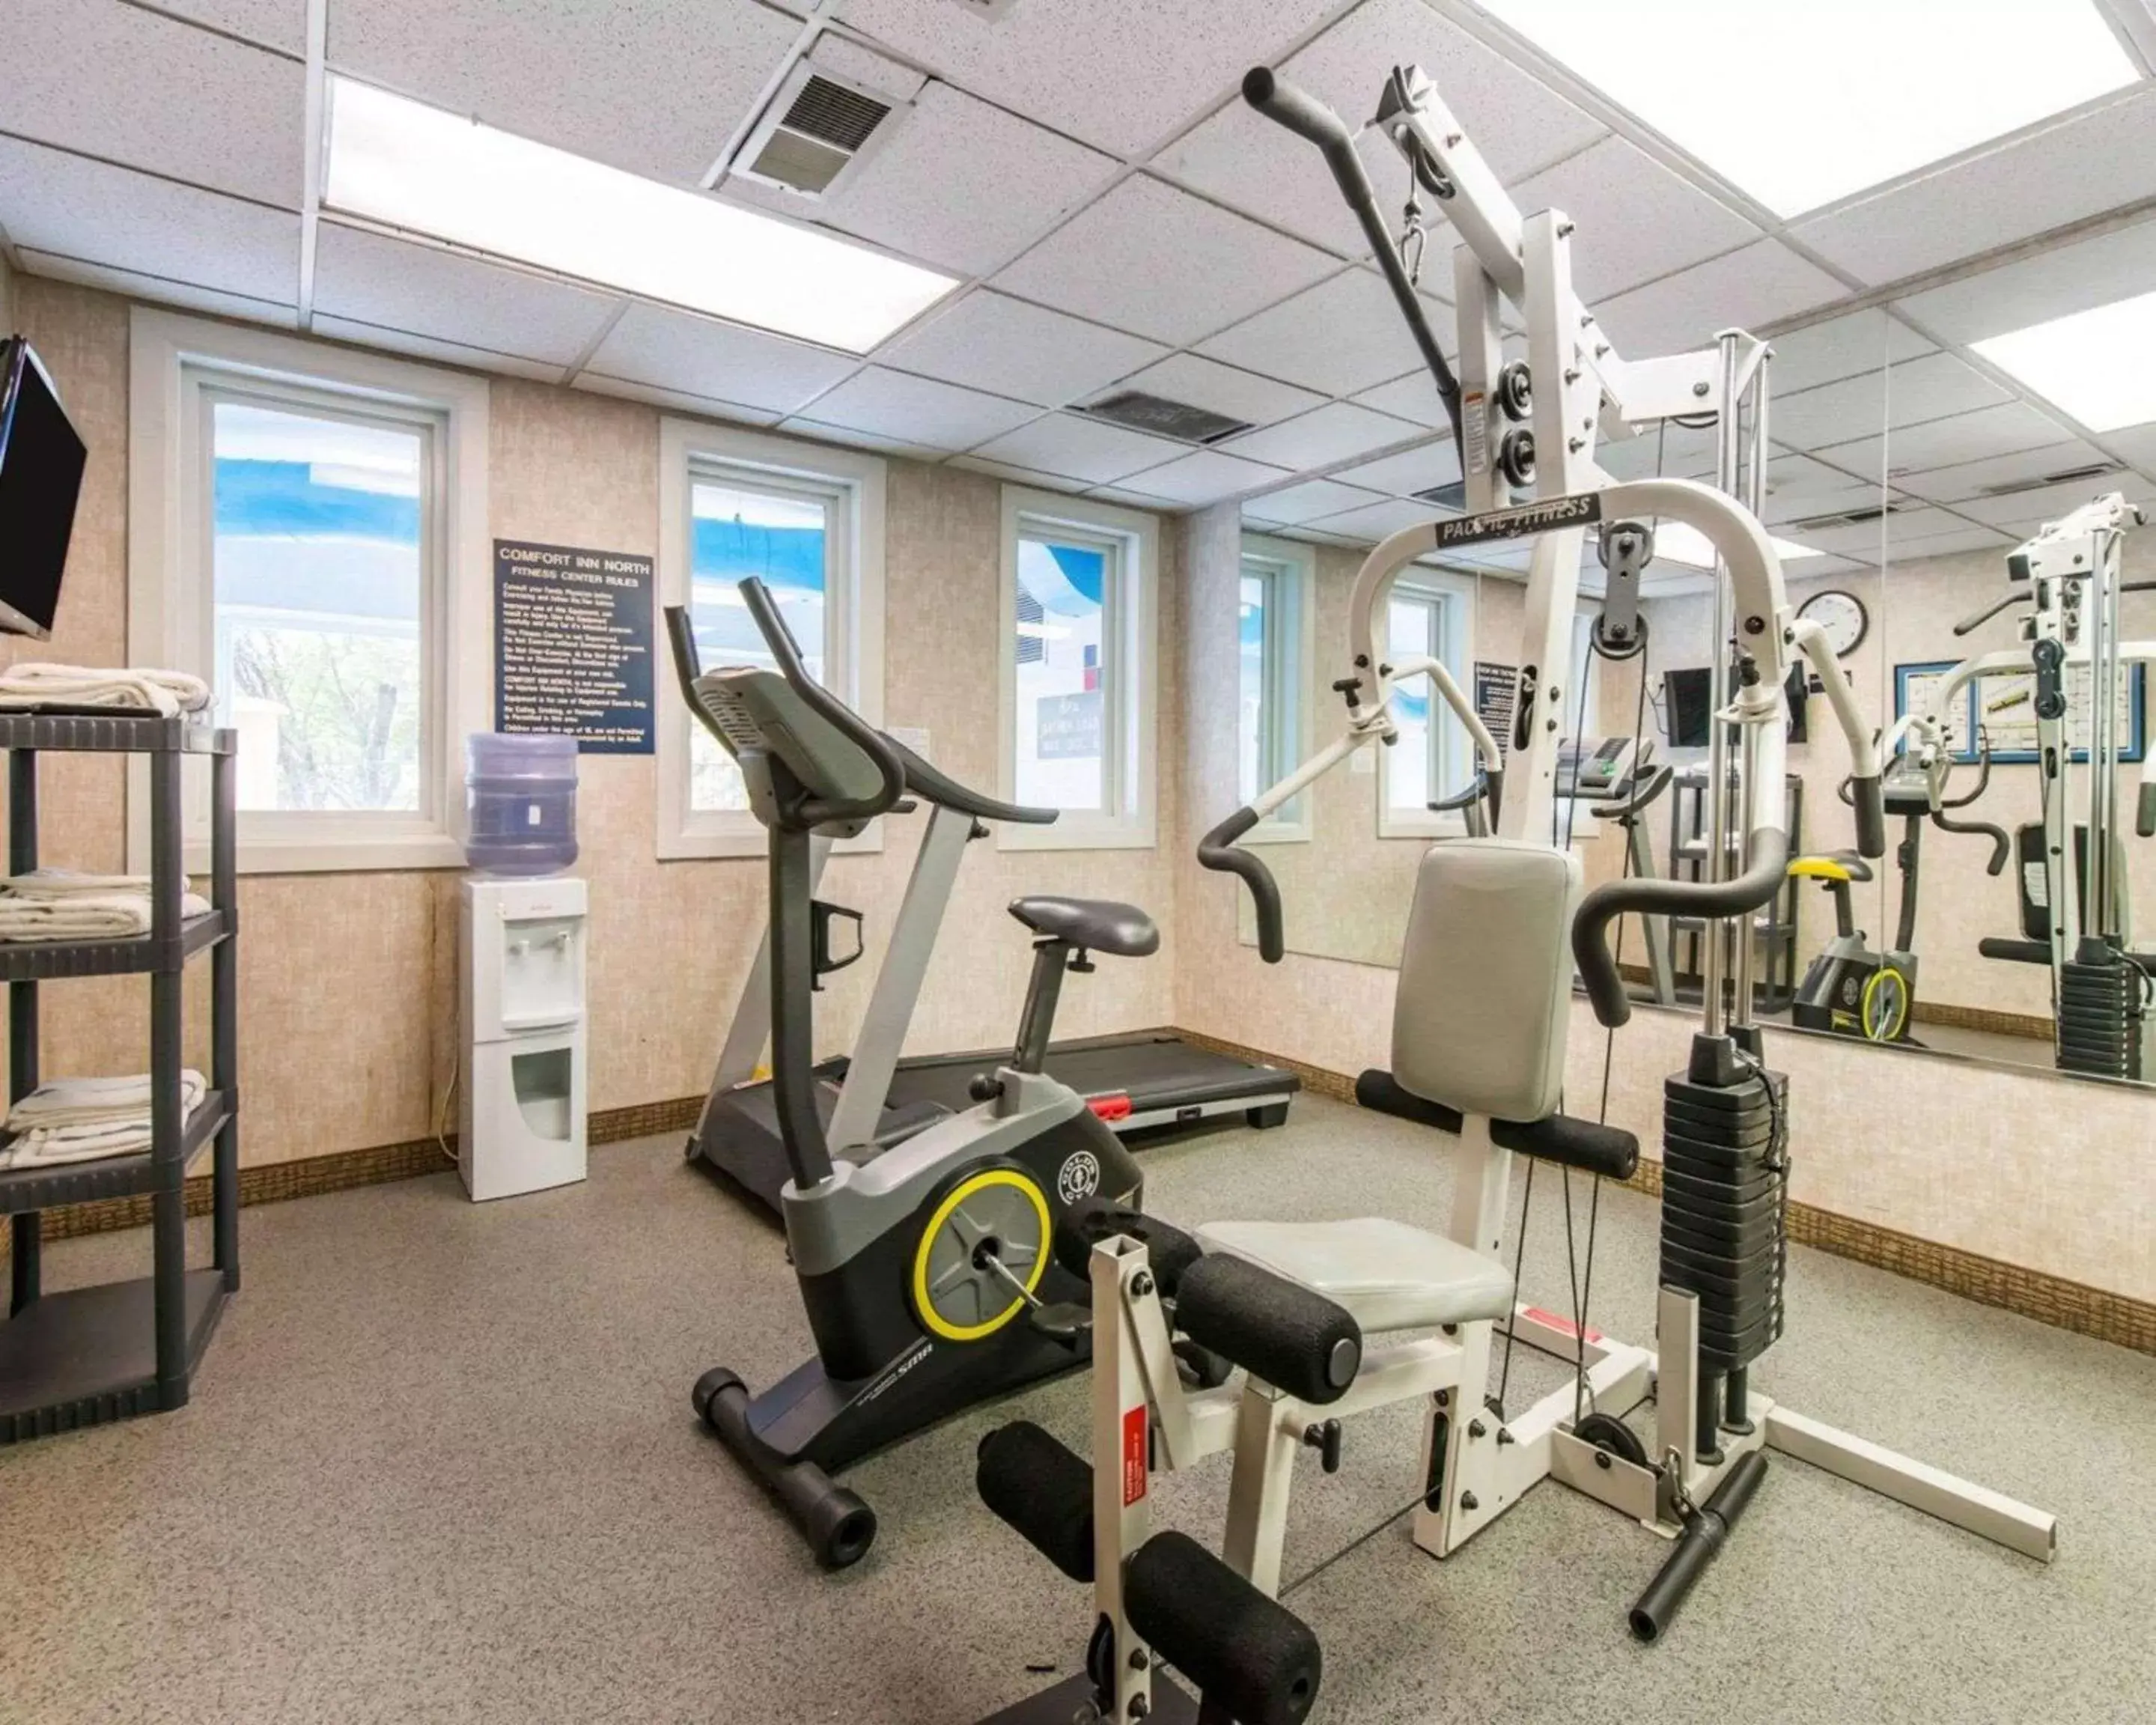 Fitness centre/facilities, Fitness Center/Facilities in Comfort Inn North Colorado Springs